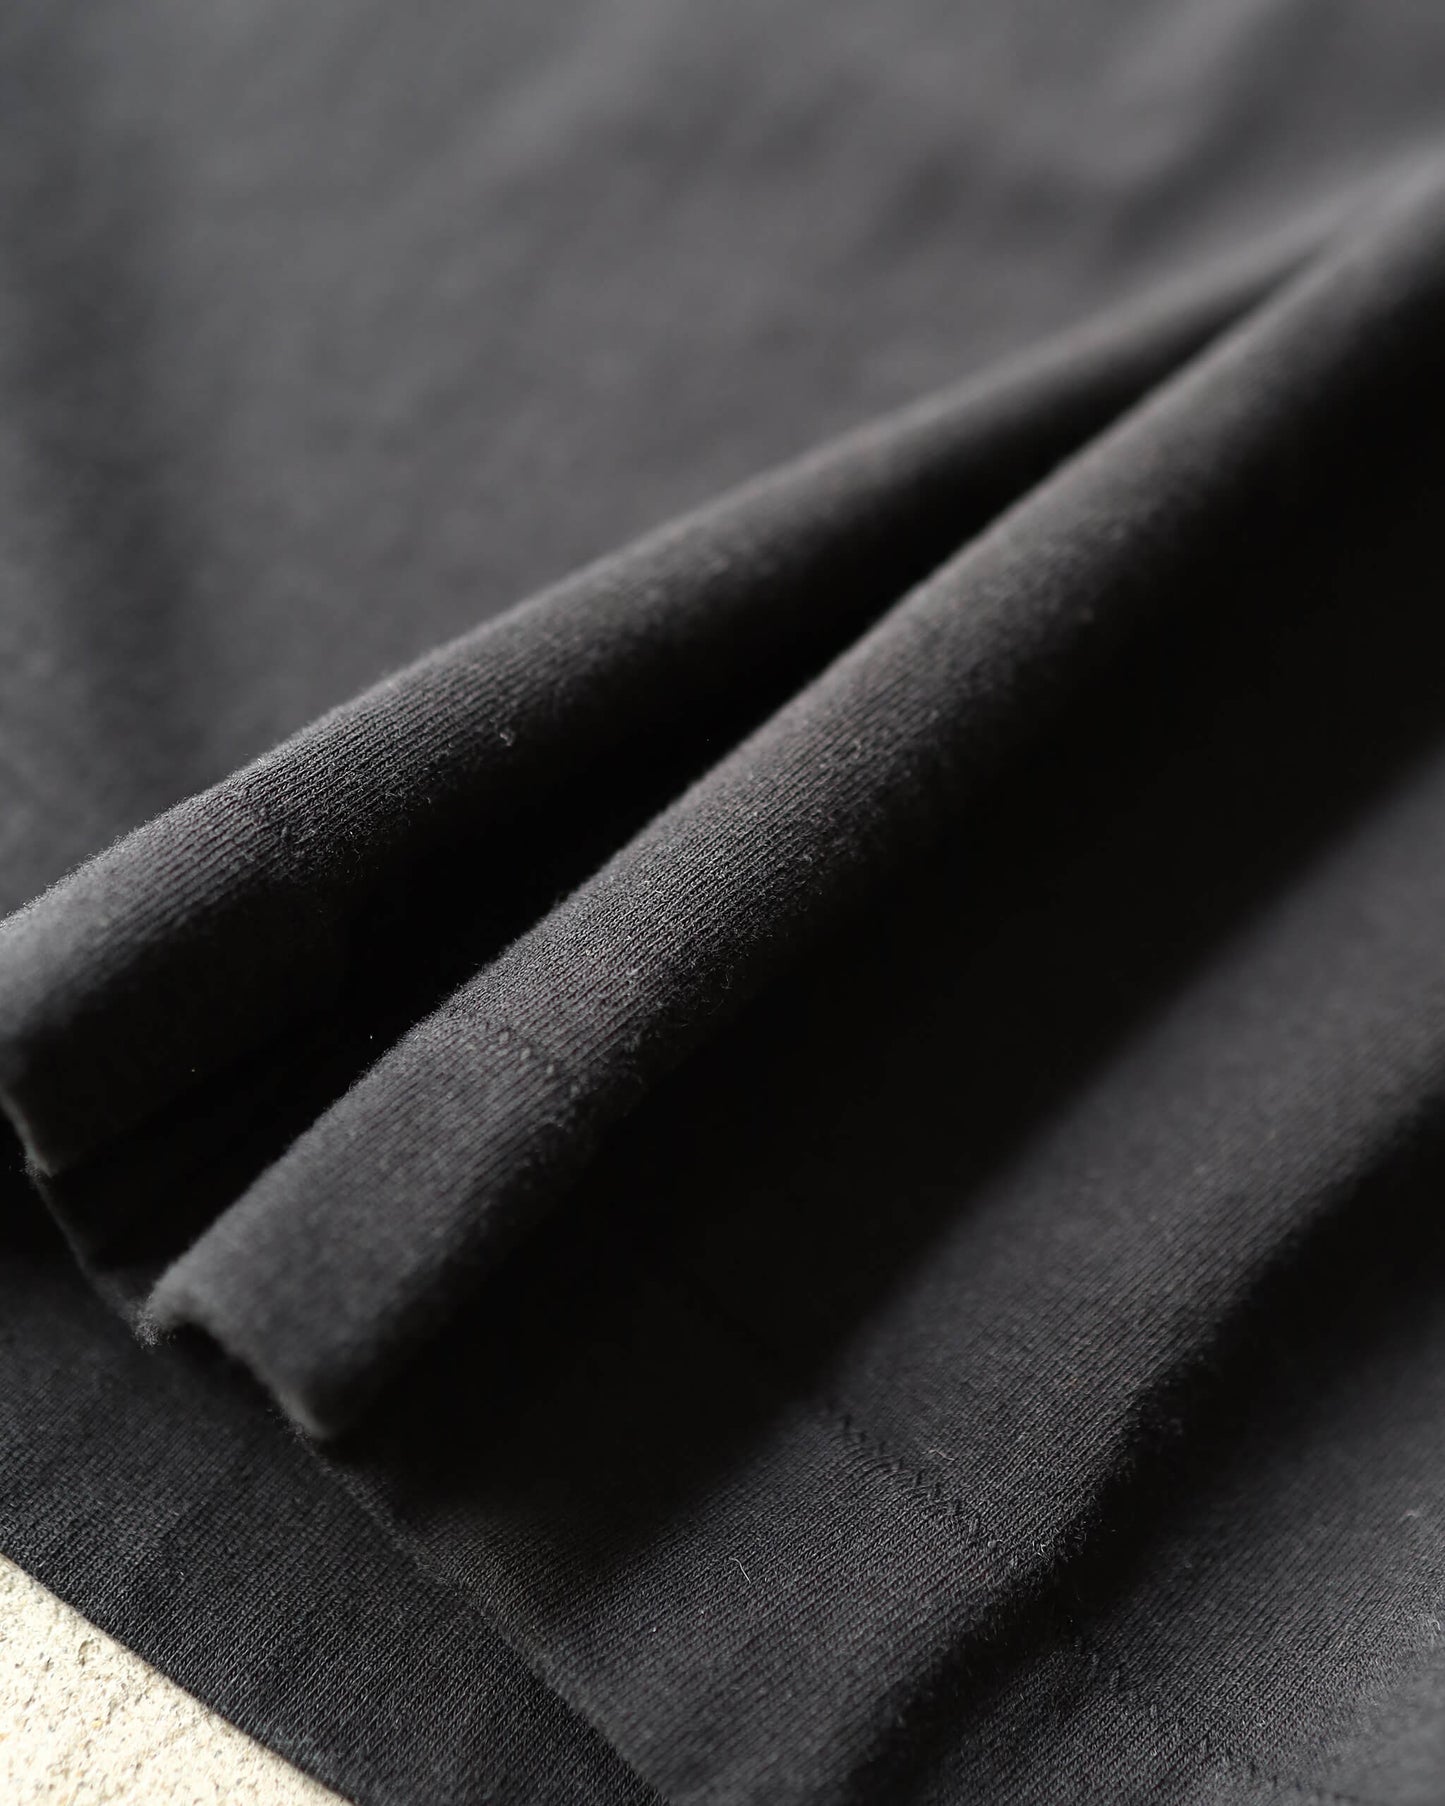 SMALL PRINTED COTTON JERSEY / CREW NECK T-SHIRT "BLACK"